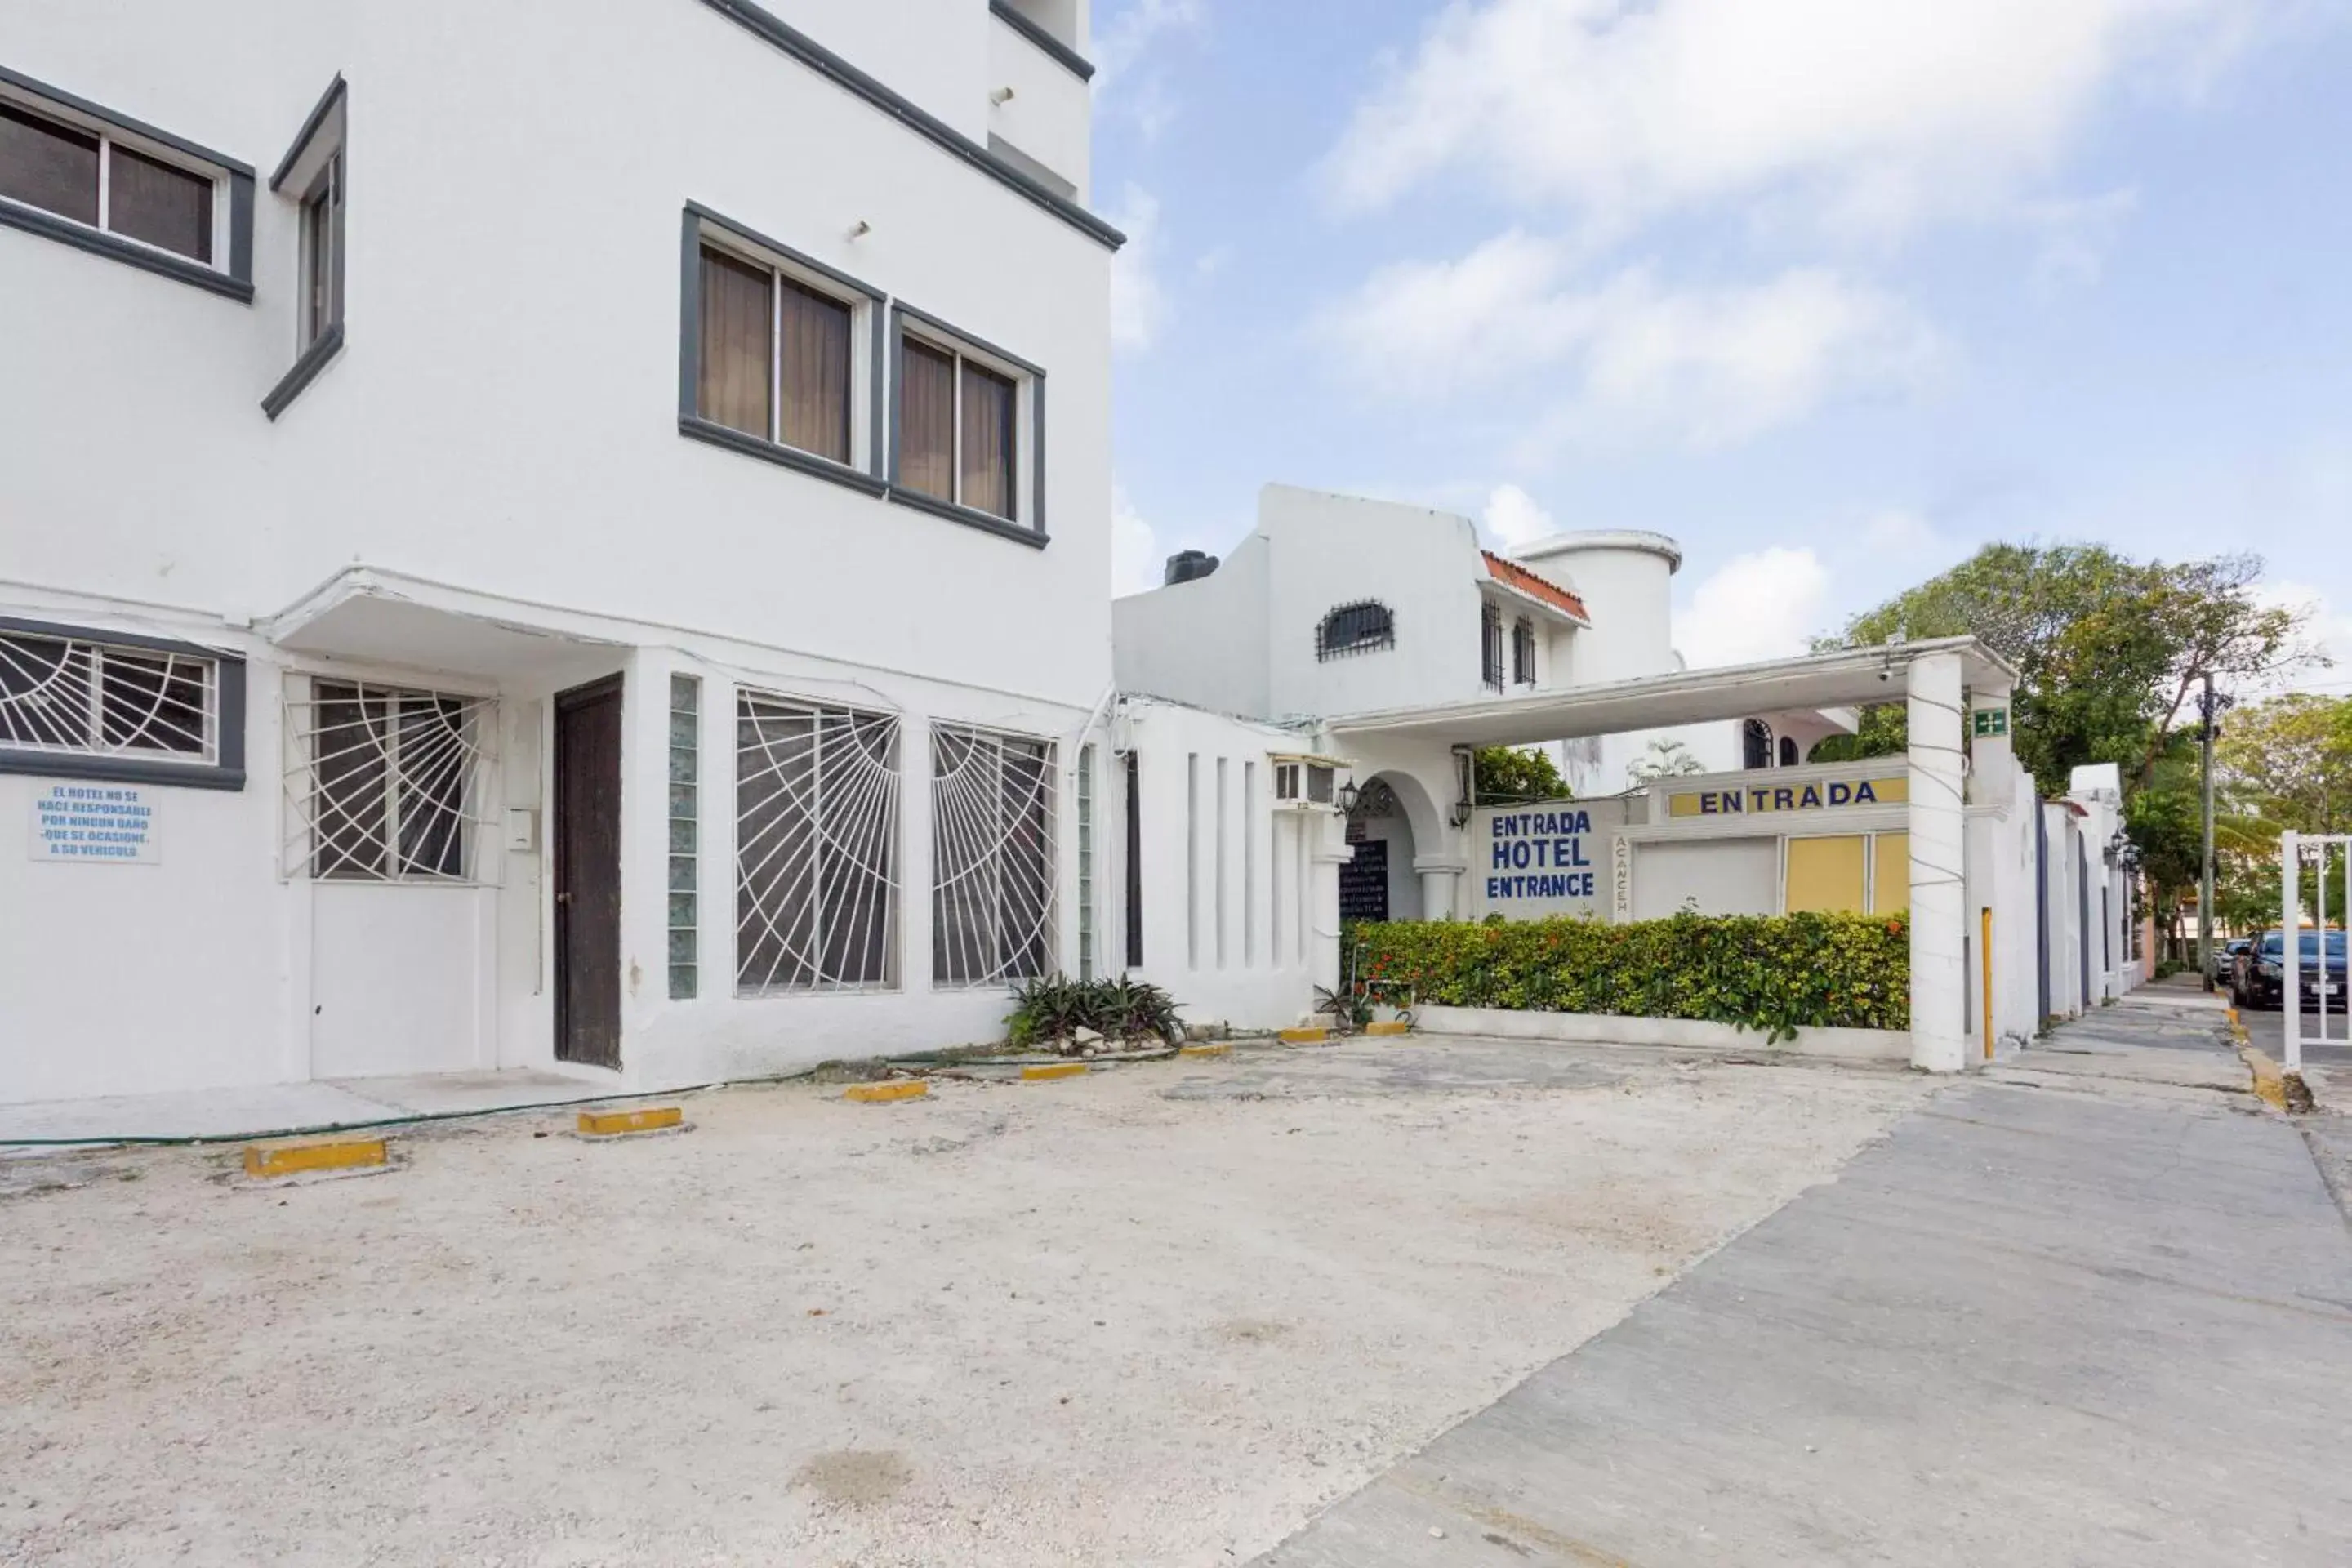 On site, Property Building in Capital O Farallon Inn, Cancún